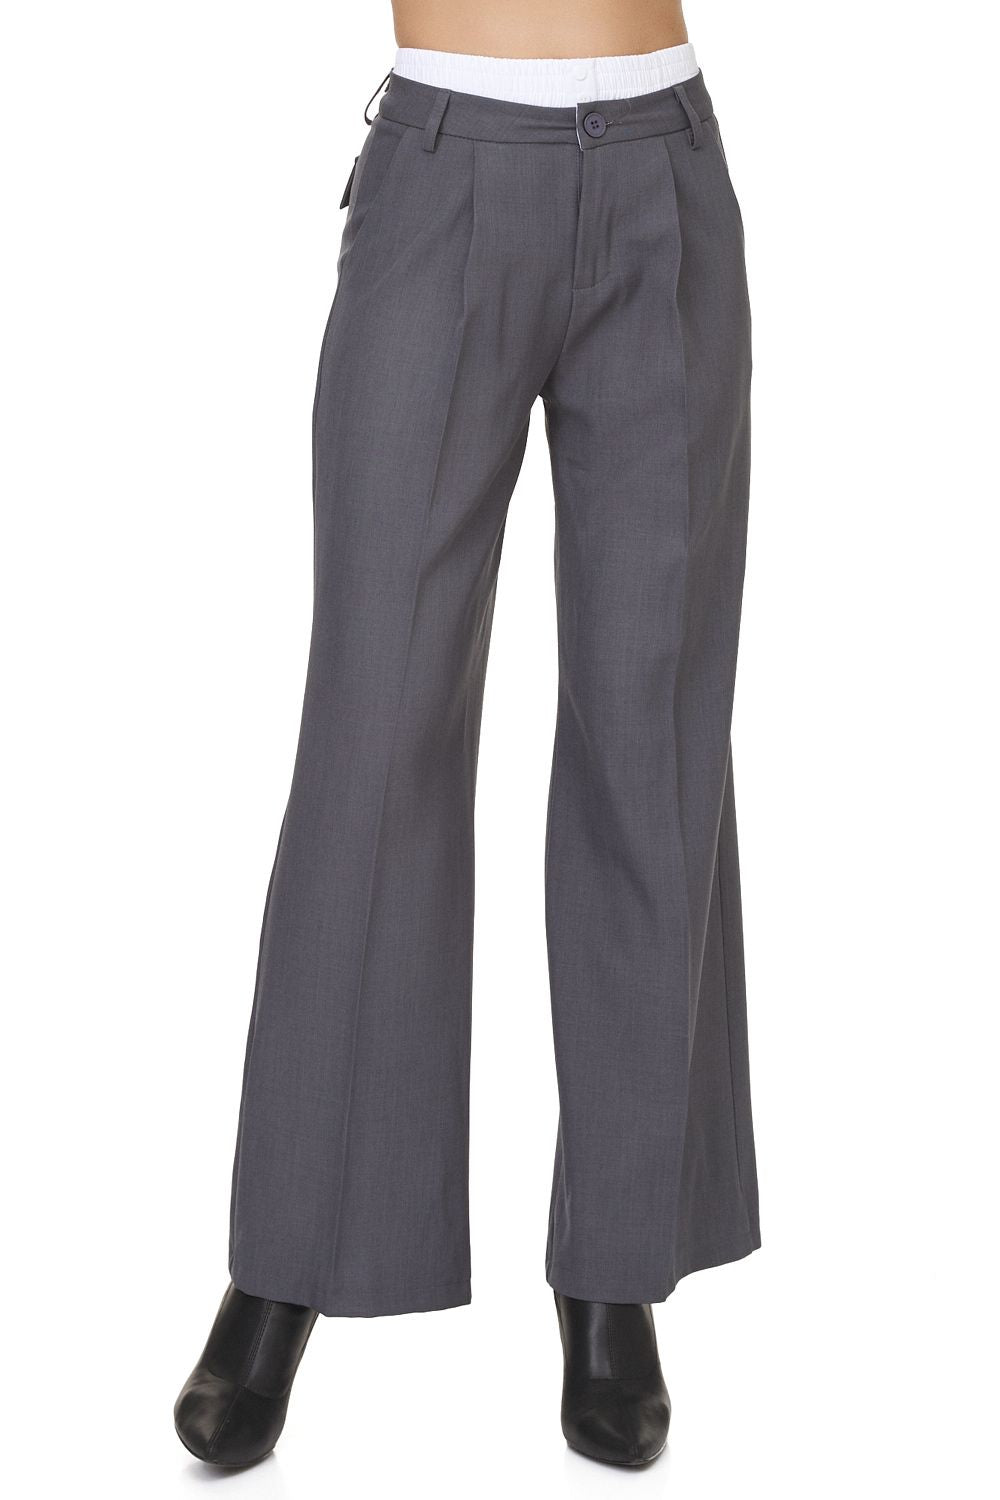 Midela grey Bogas ladies elegant trousers